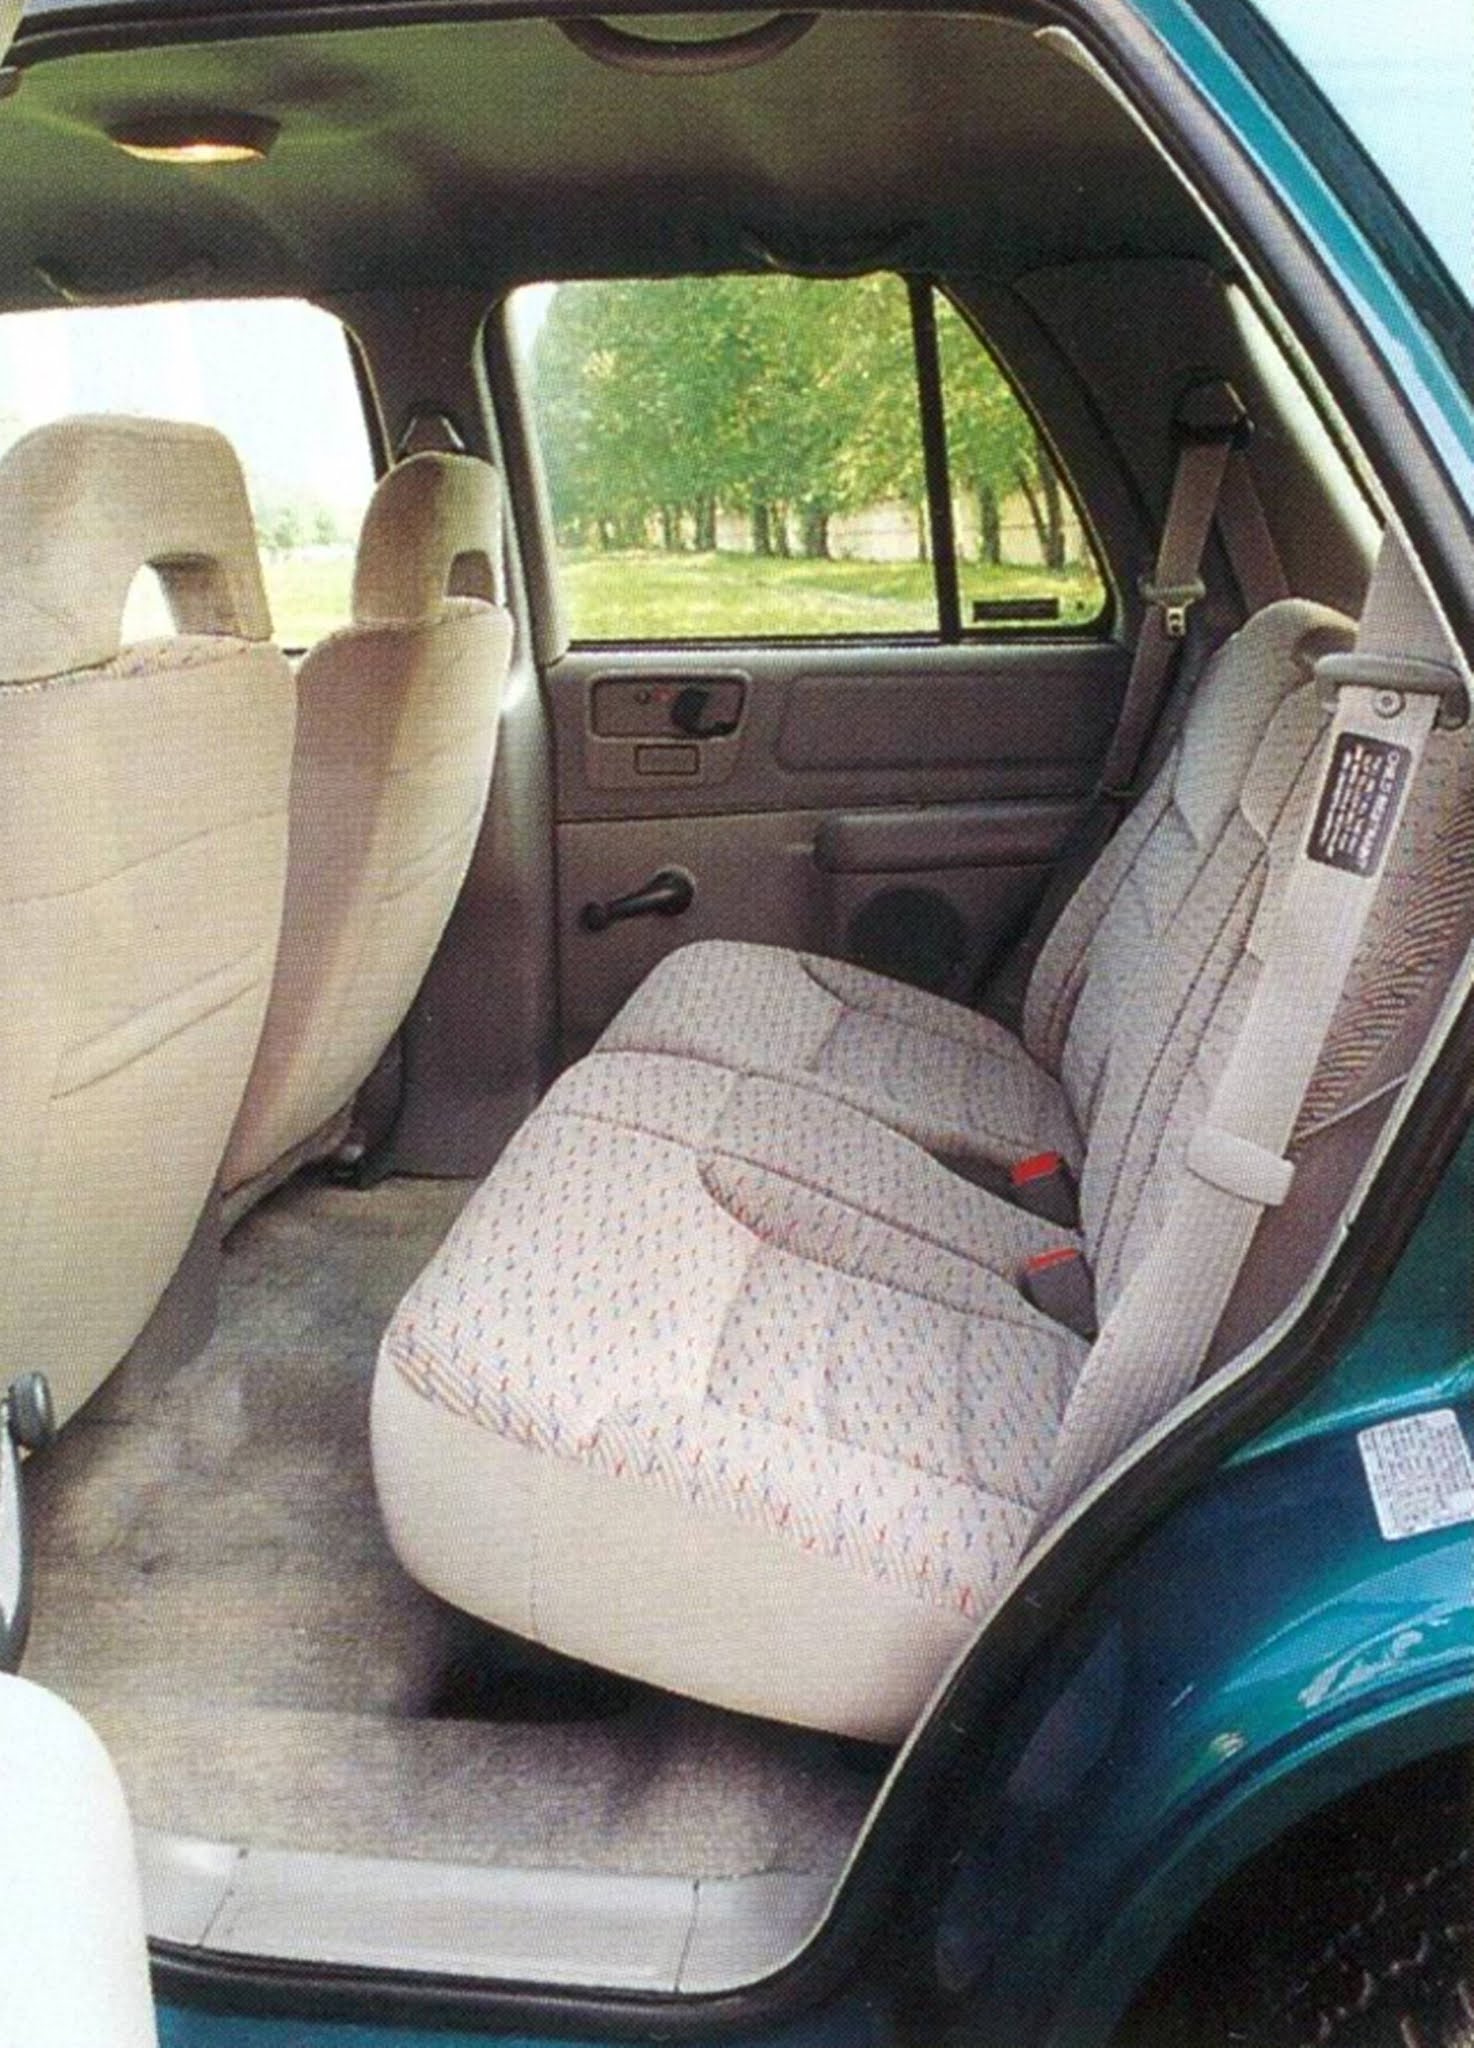 Chevrolet Blazer 1996 a 2000 2.8 Turbo Diesel - consumo